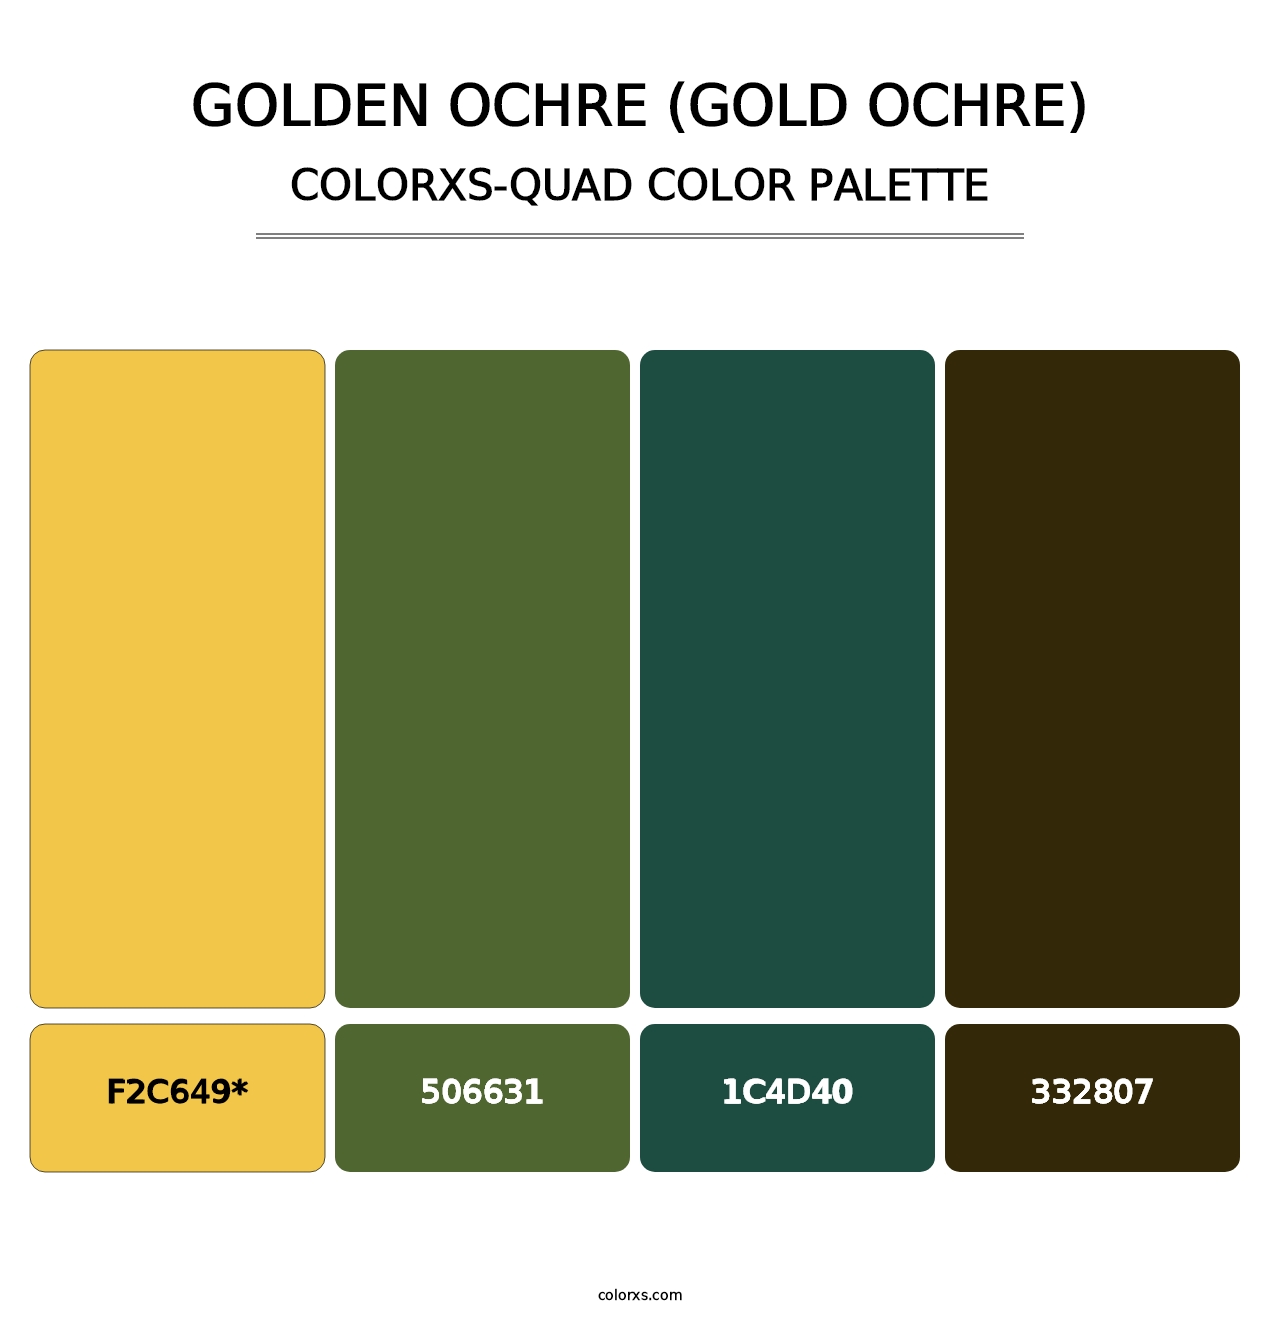 Golden Ochre (Gold Ochre) - Colorxs Quad Palette